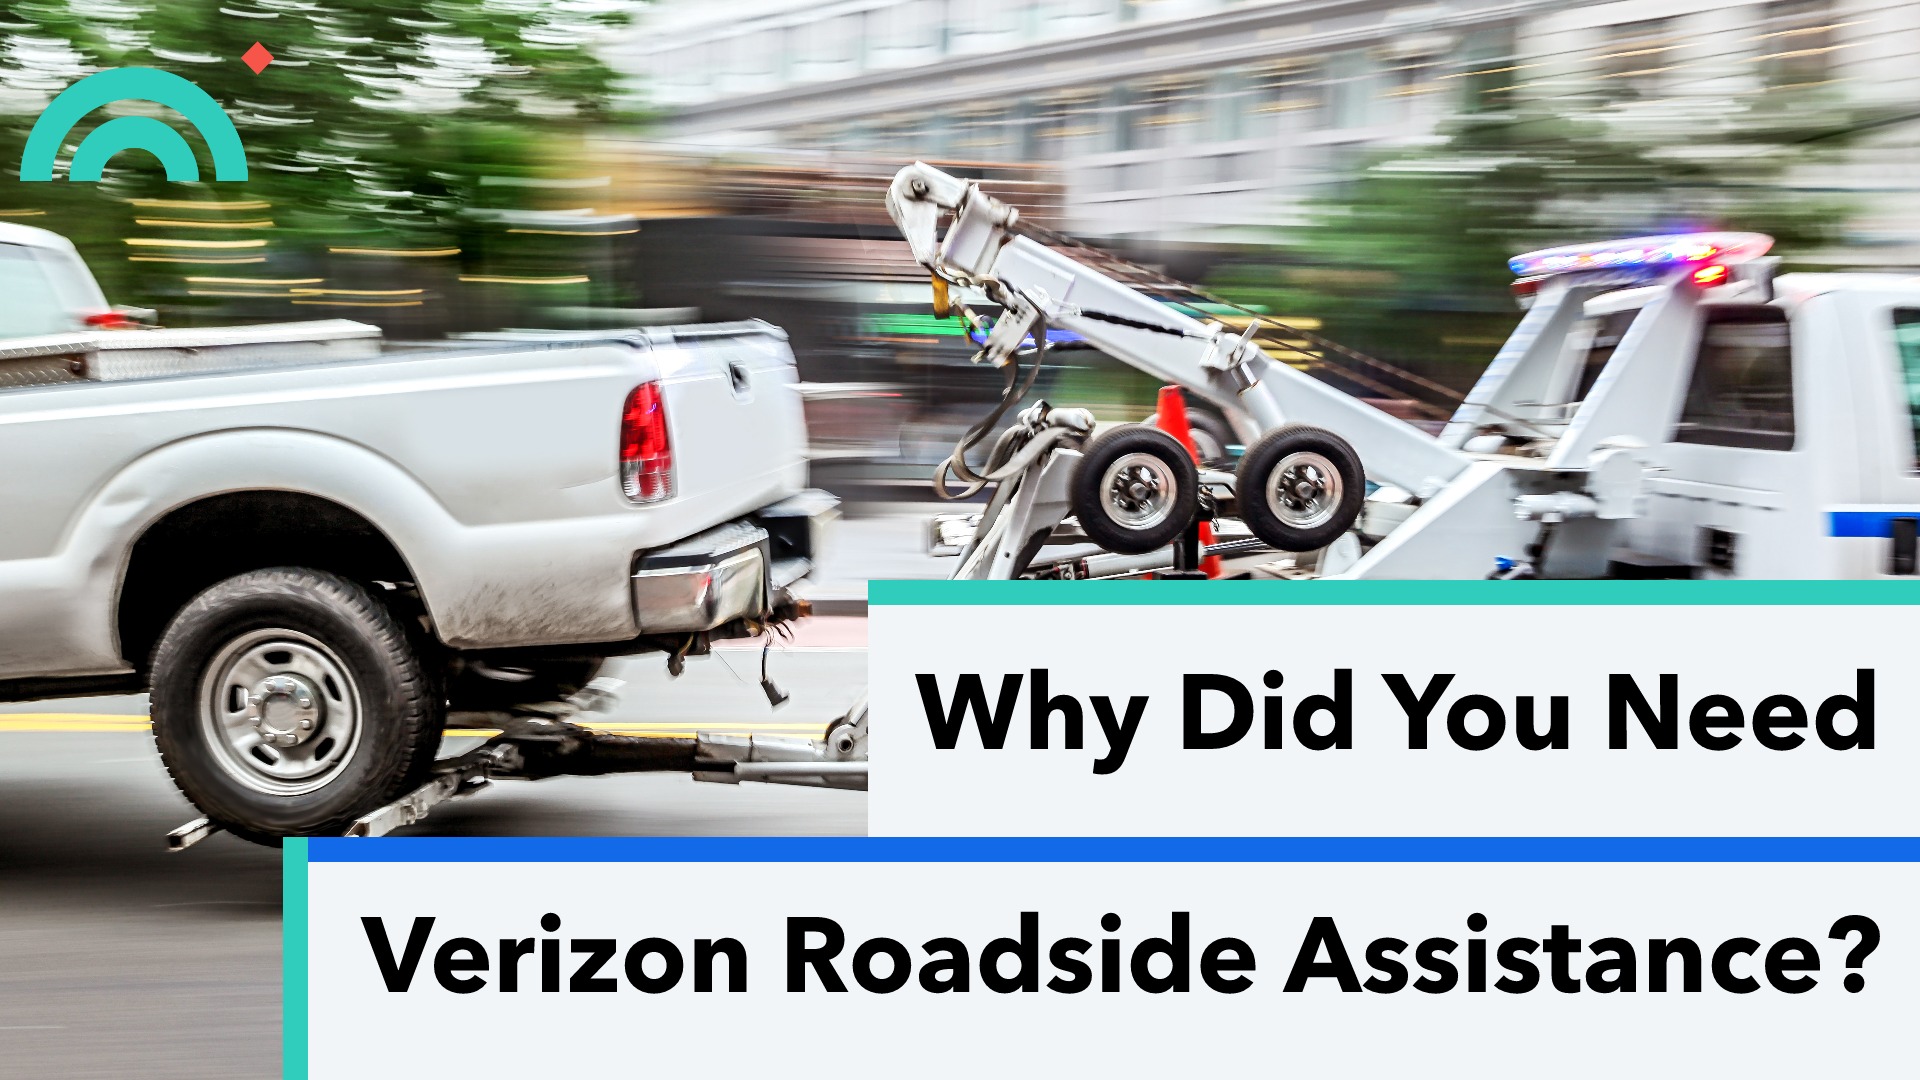 Verizon roadside assistance